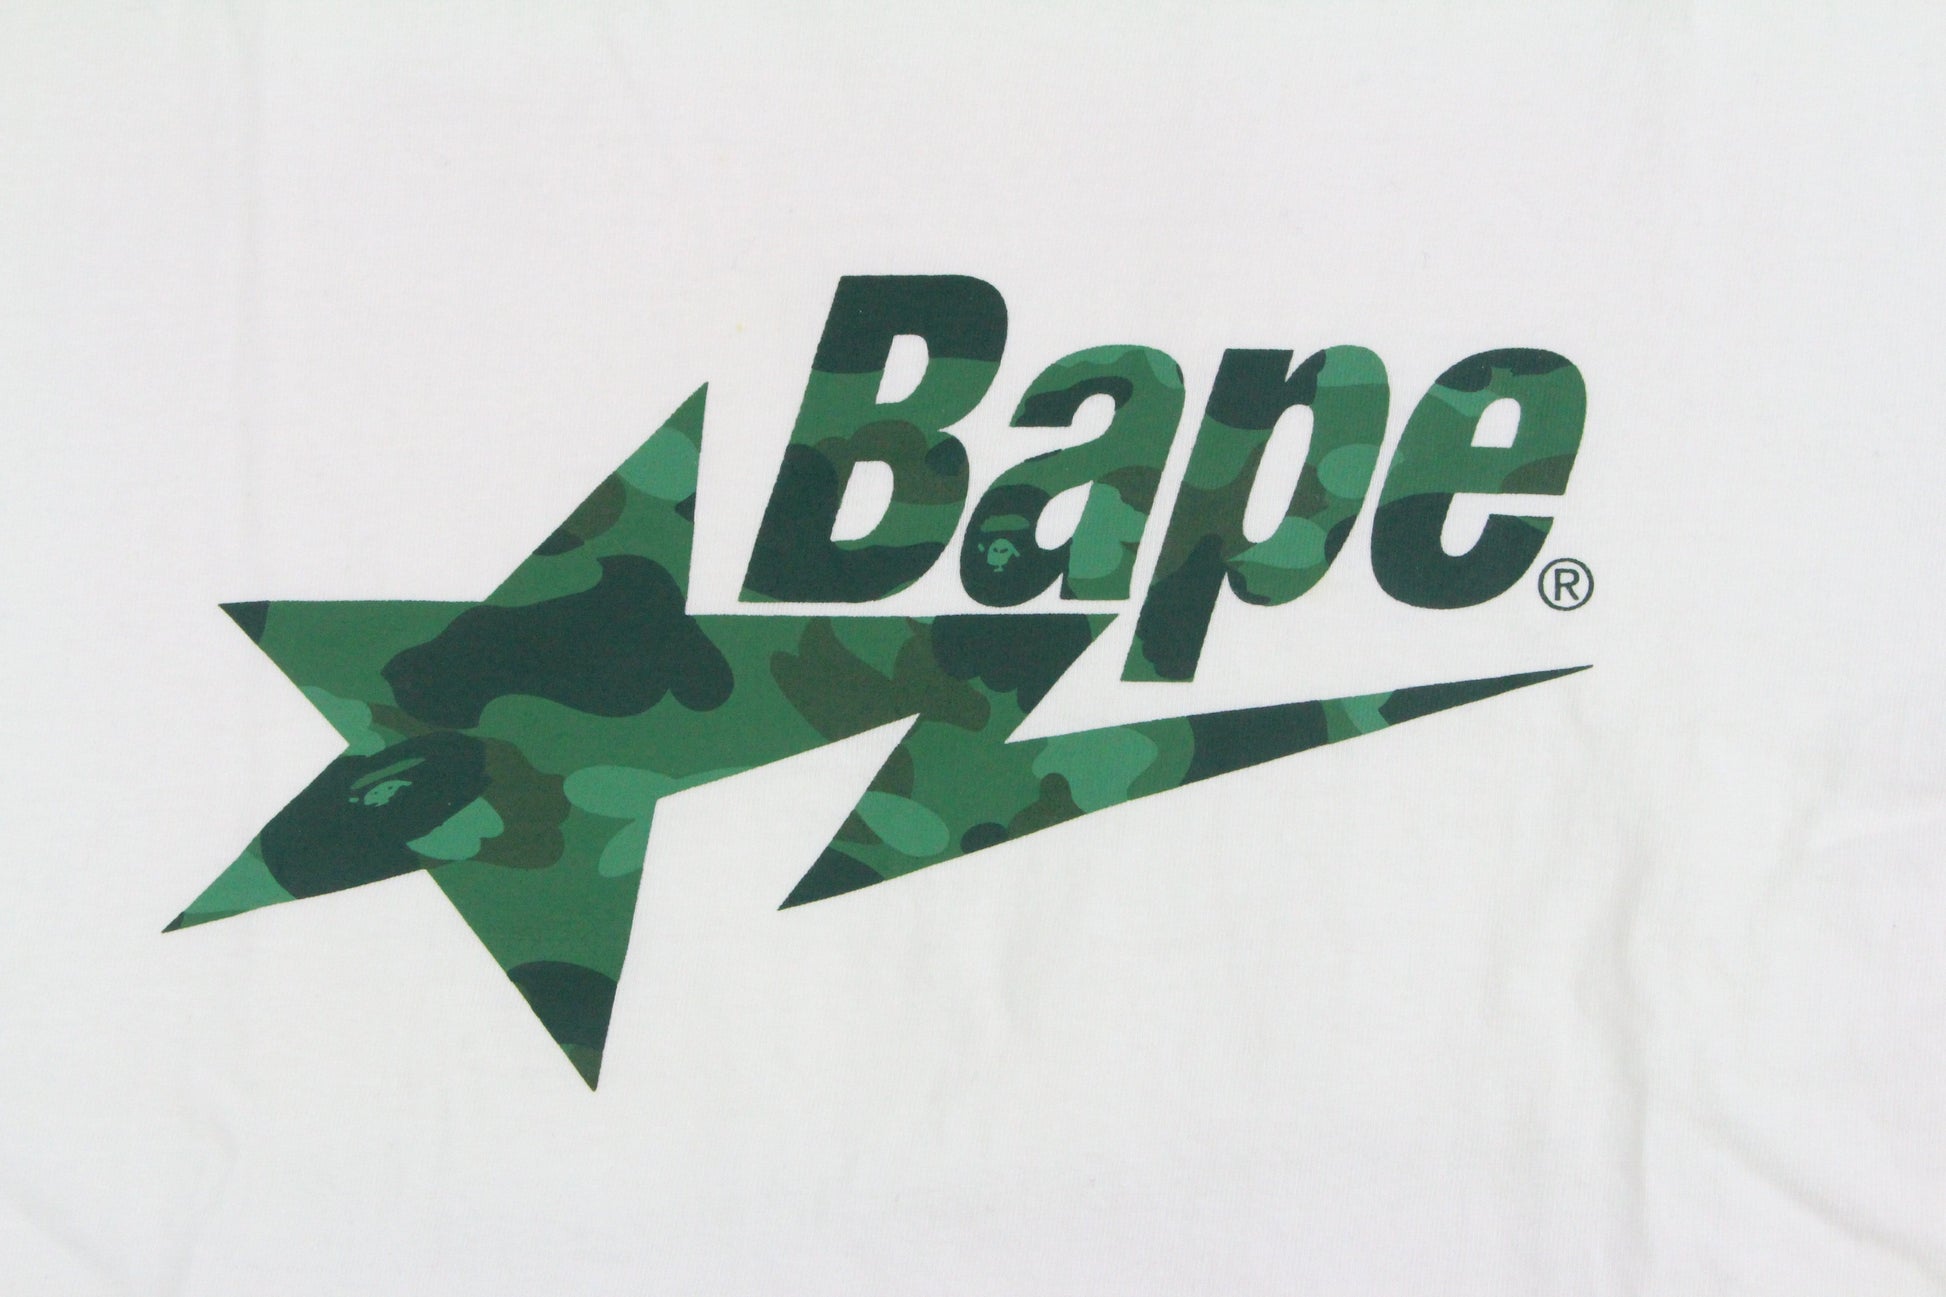 Bape Green Camo Bape Star Logo Tee White - SaruGeneral